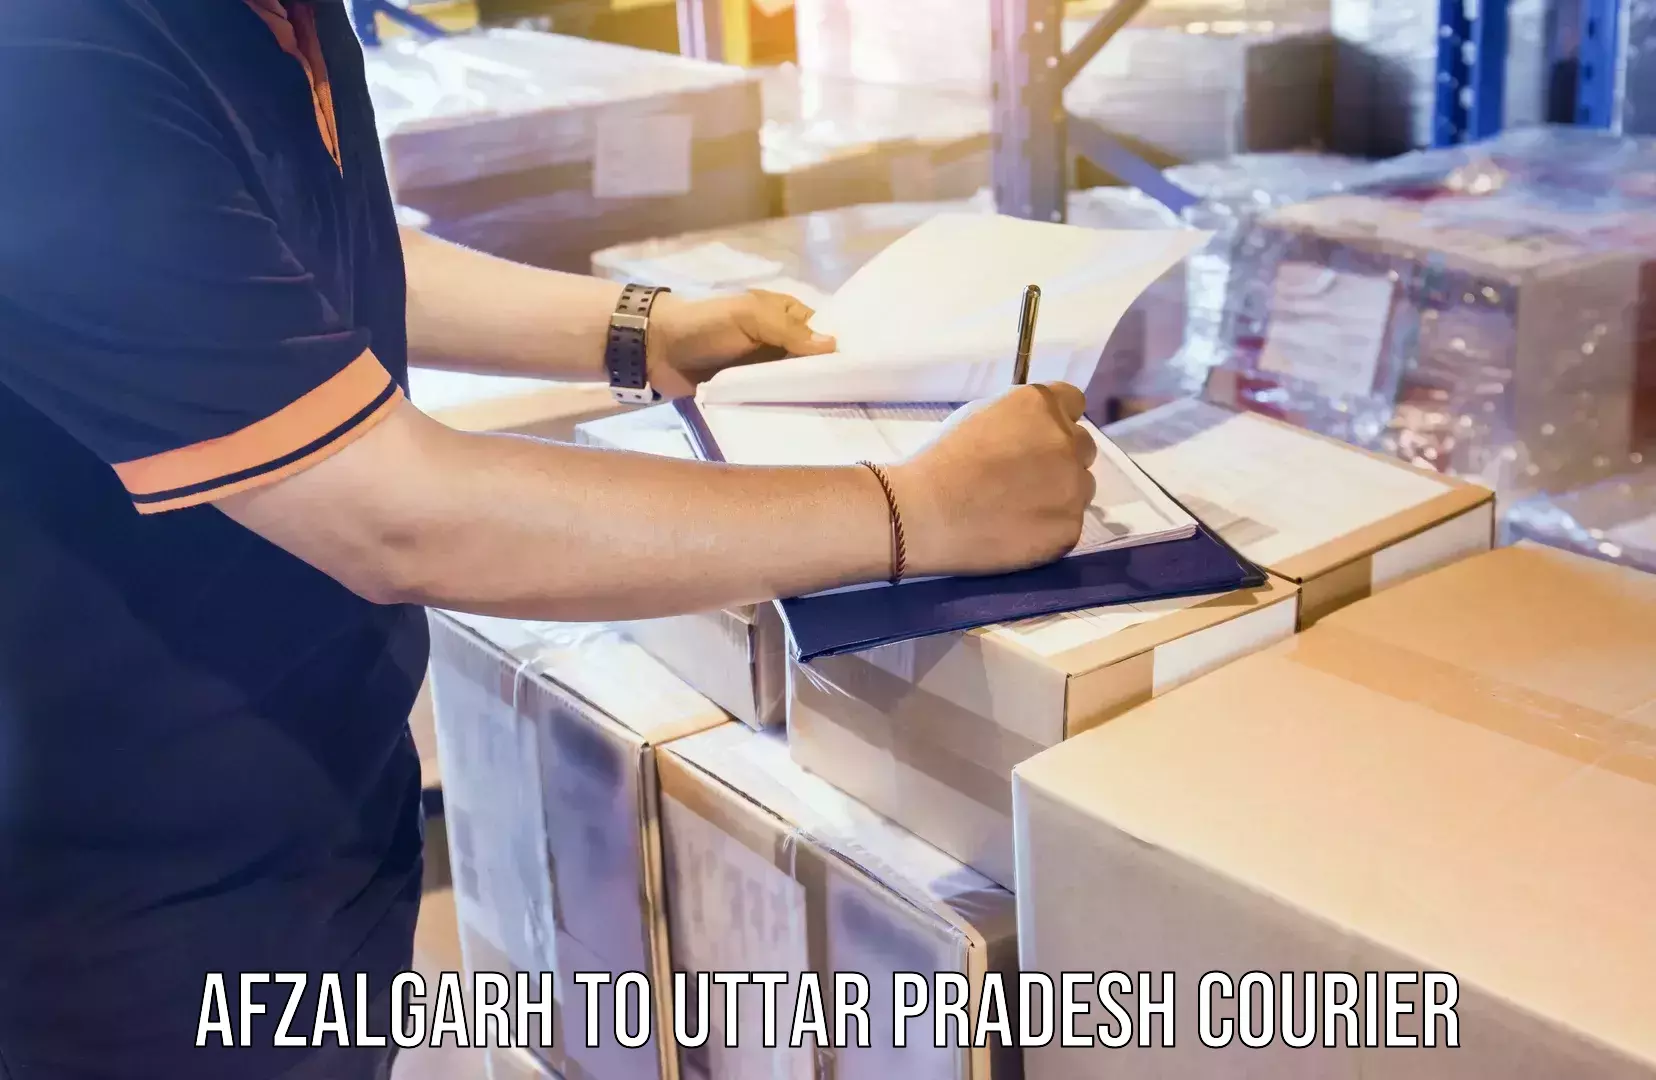 User-friendly delivery service Afzalgarh to Uttar Pradesh